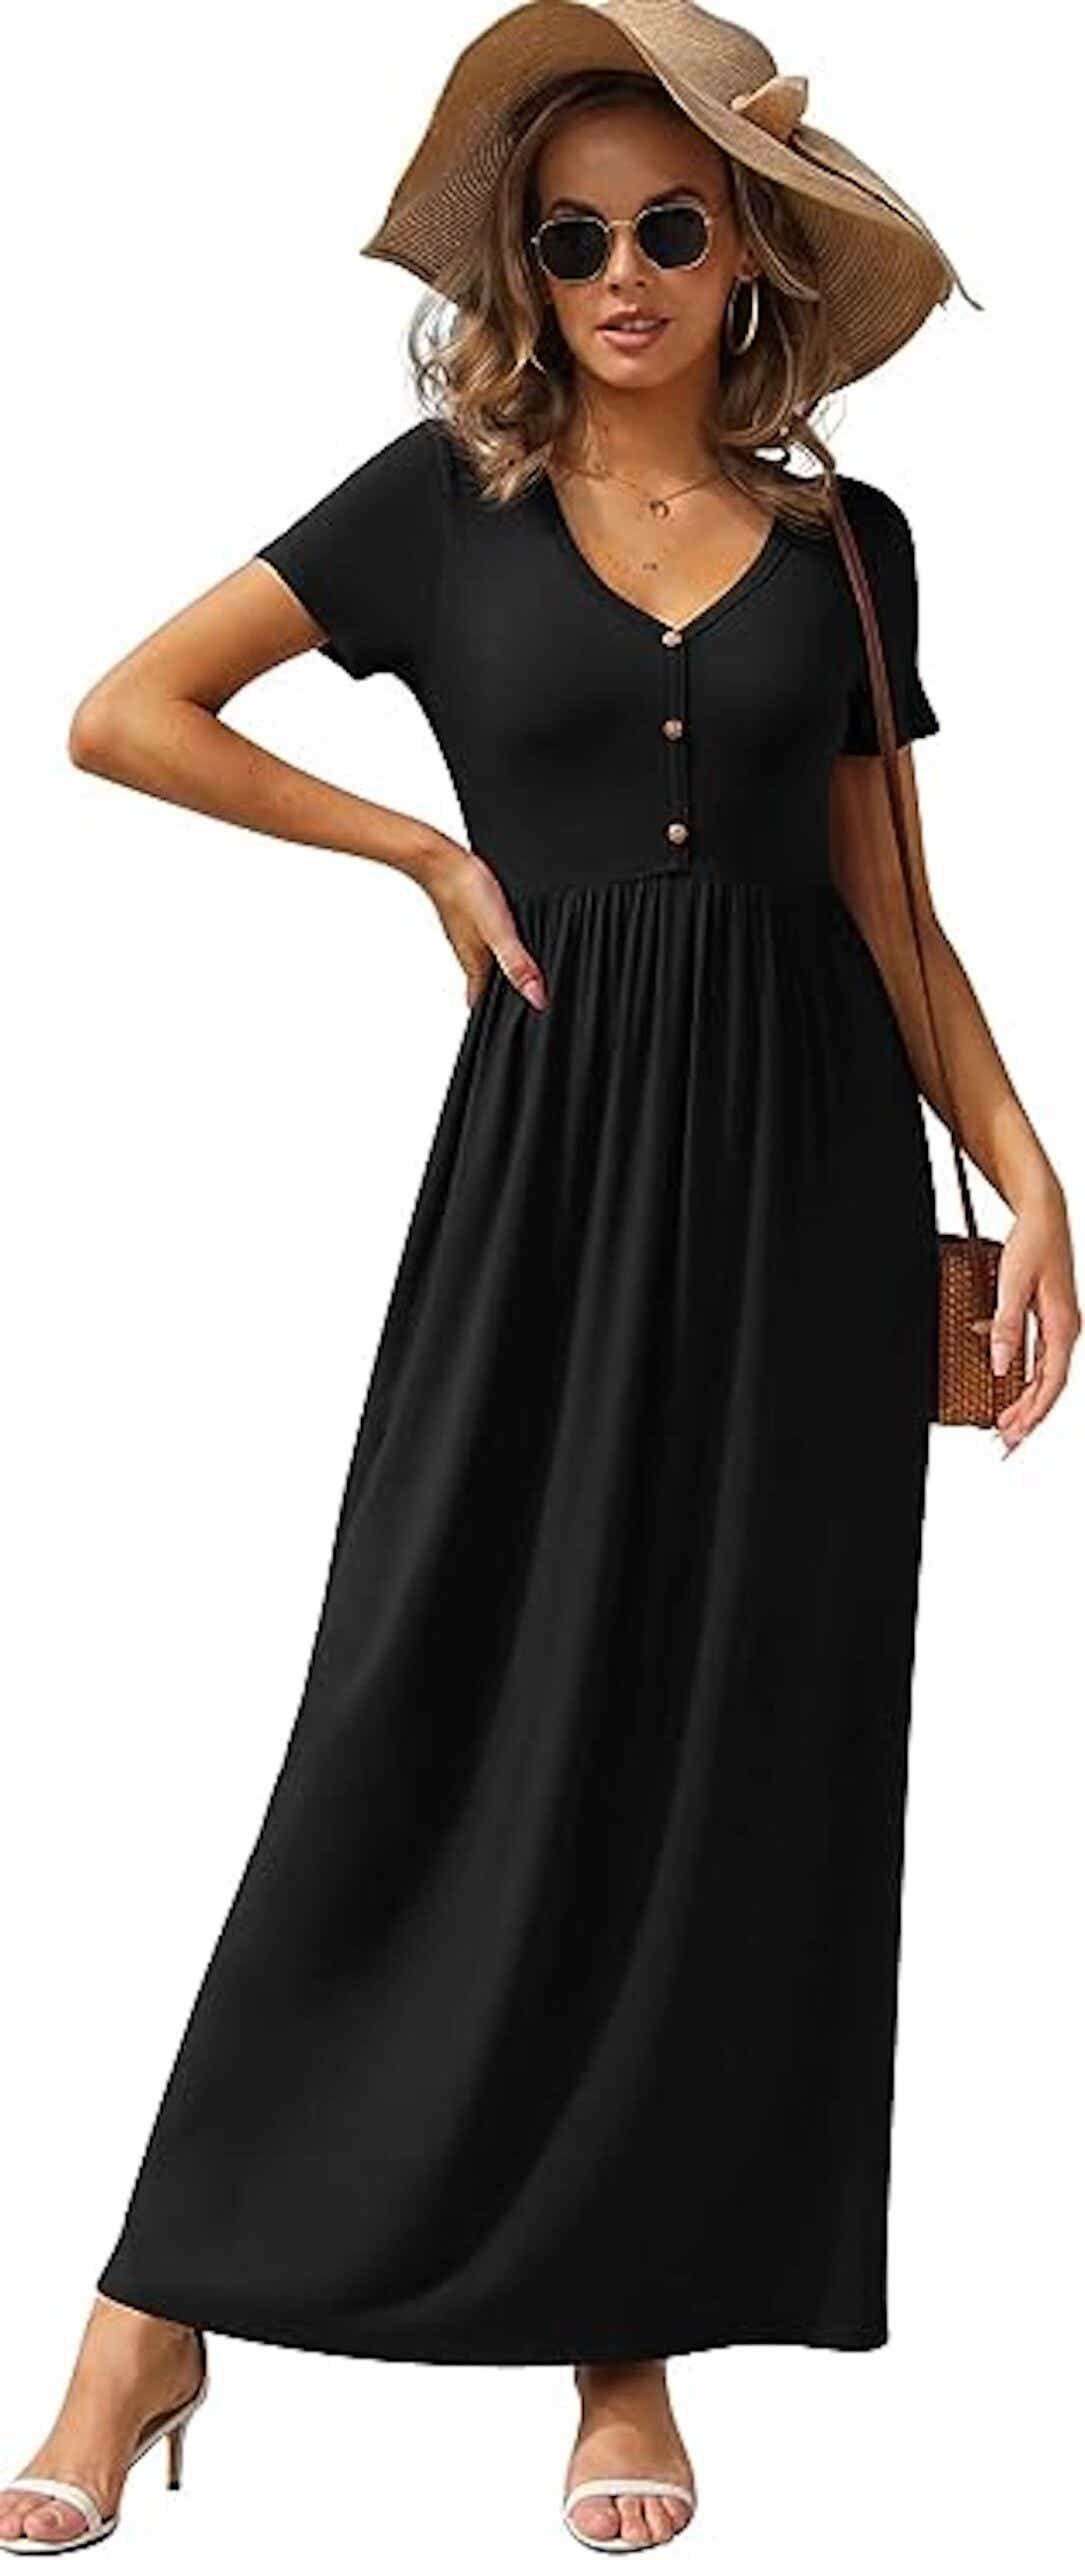 A short sleeved black maxi dress